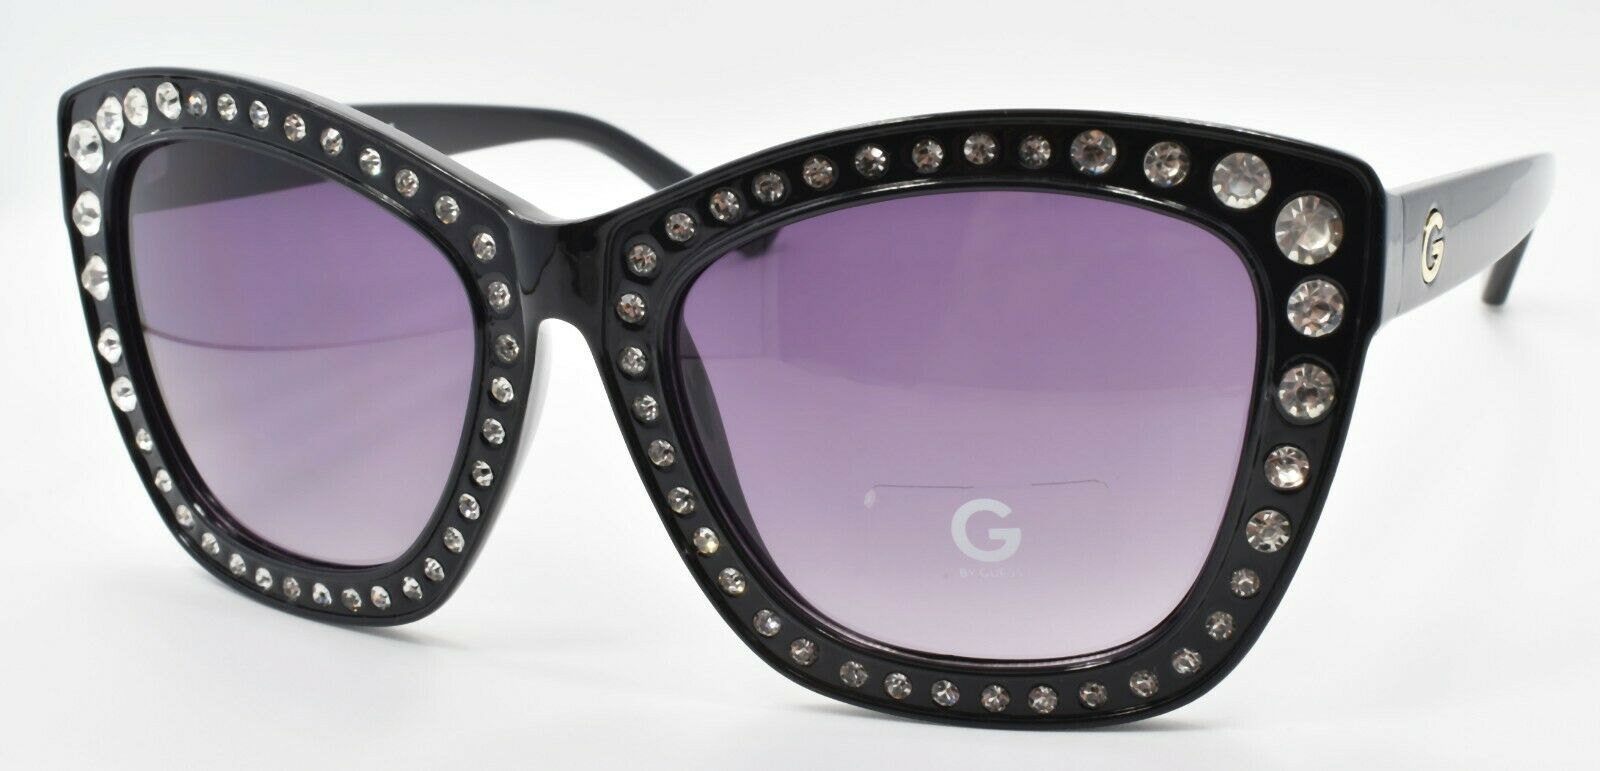 1-G by GUESS GG1174 01A Women's Sunglasses 56-20-140 Black + Rhinestones / Smoke-889214033758-IKSpecs